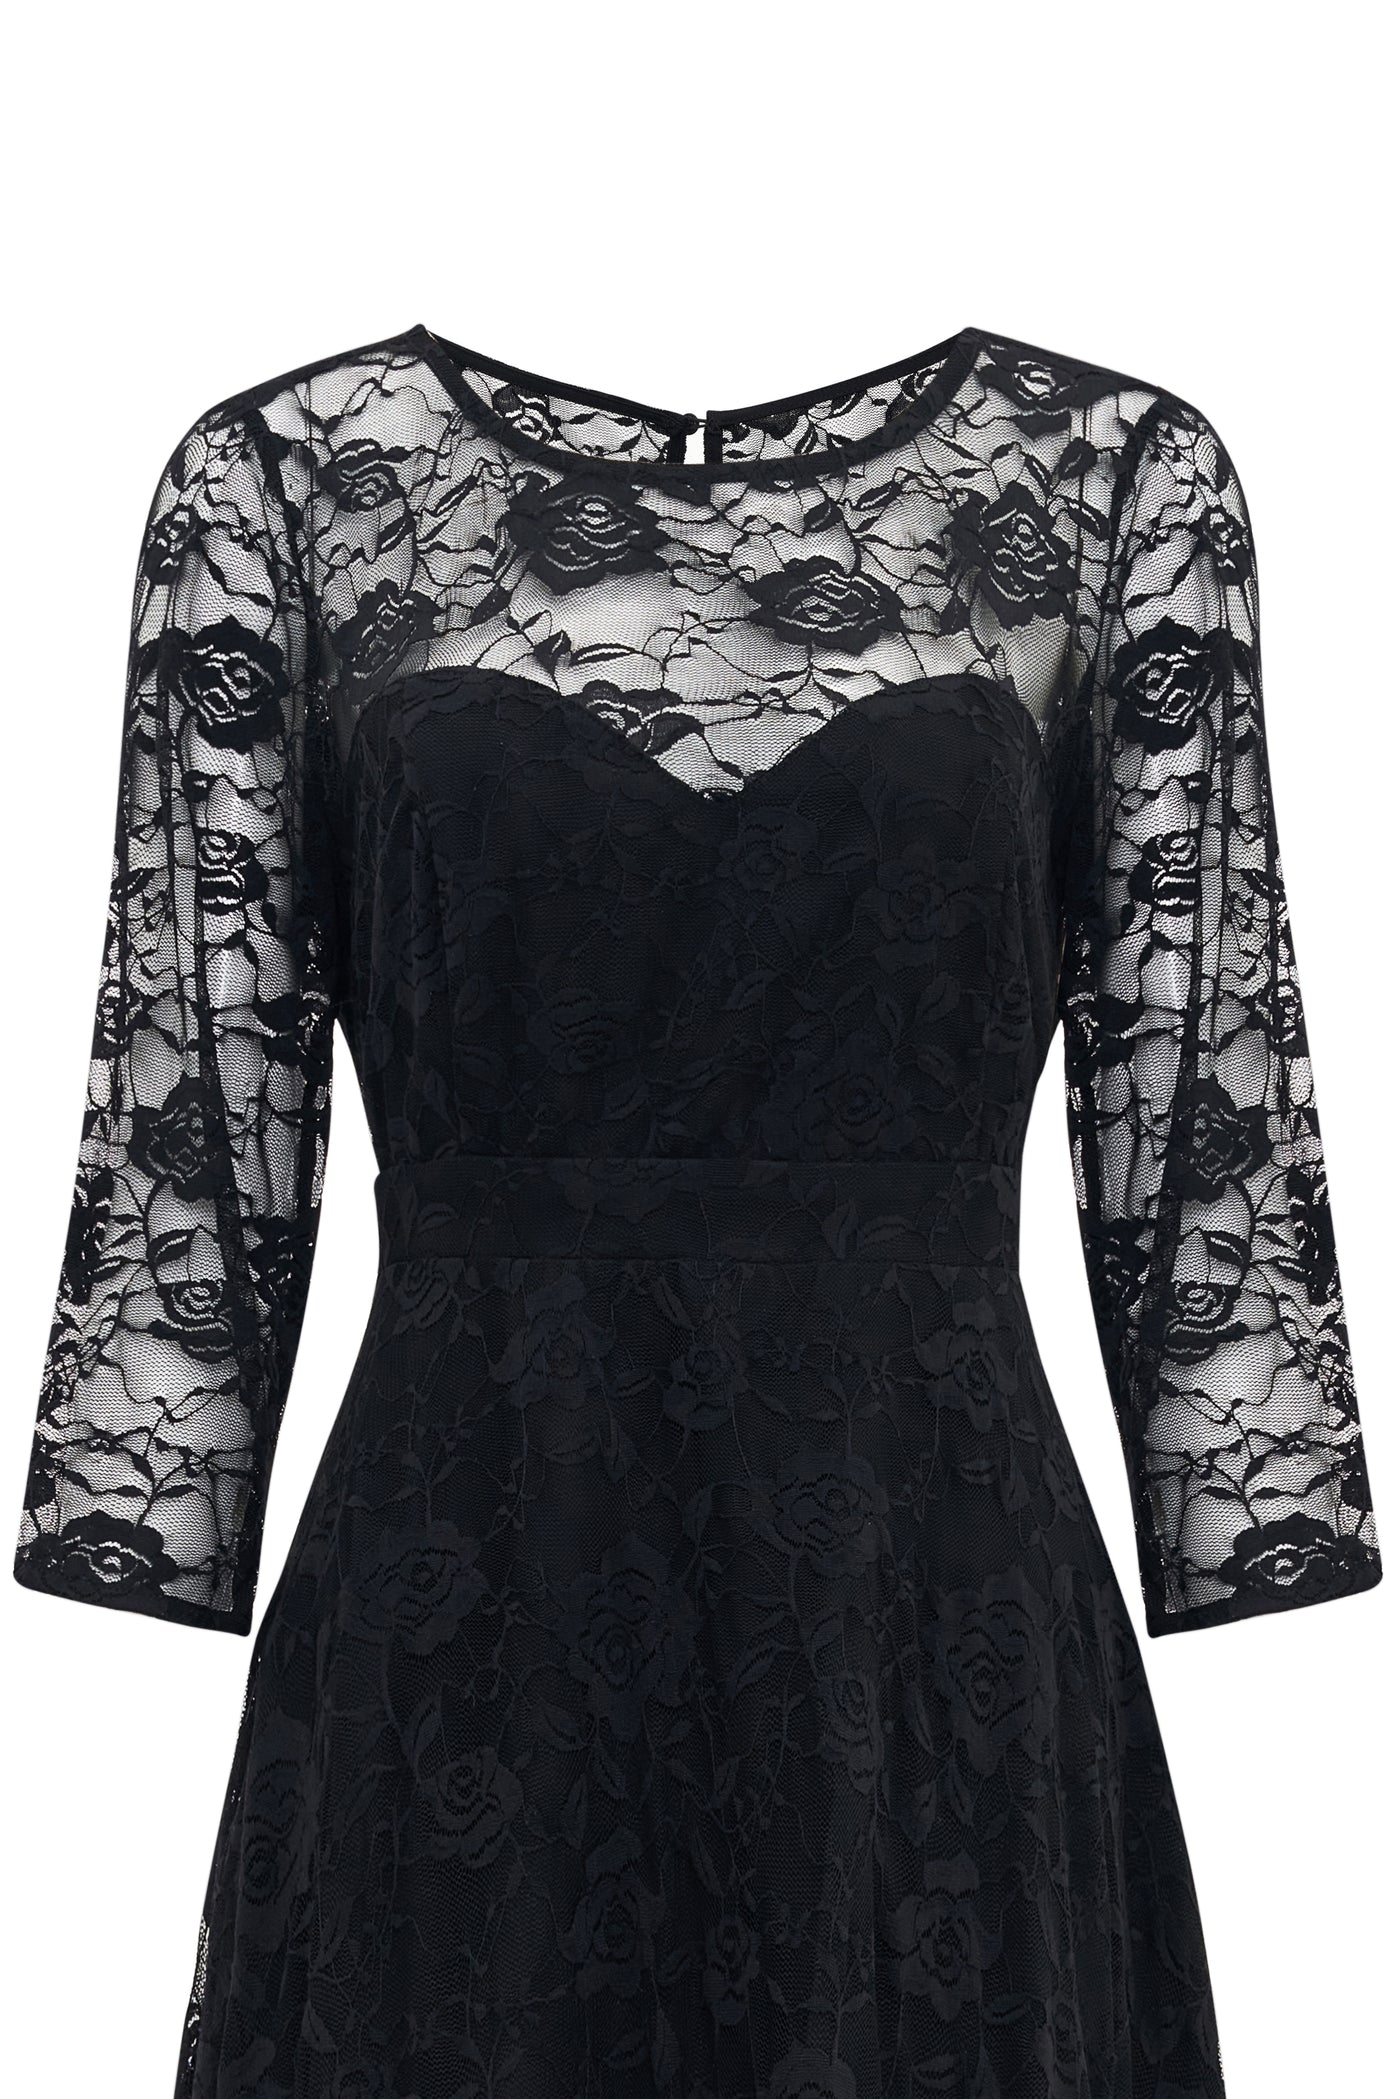 Woman's Black Formal Lace Dress